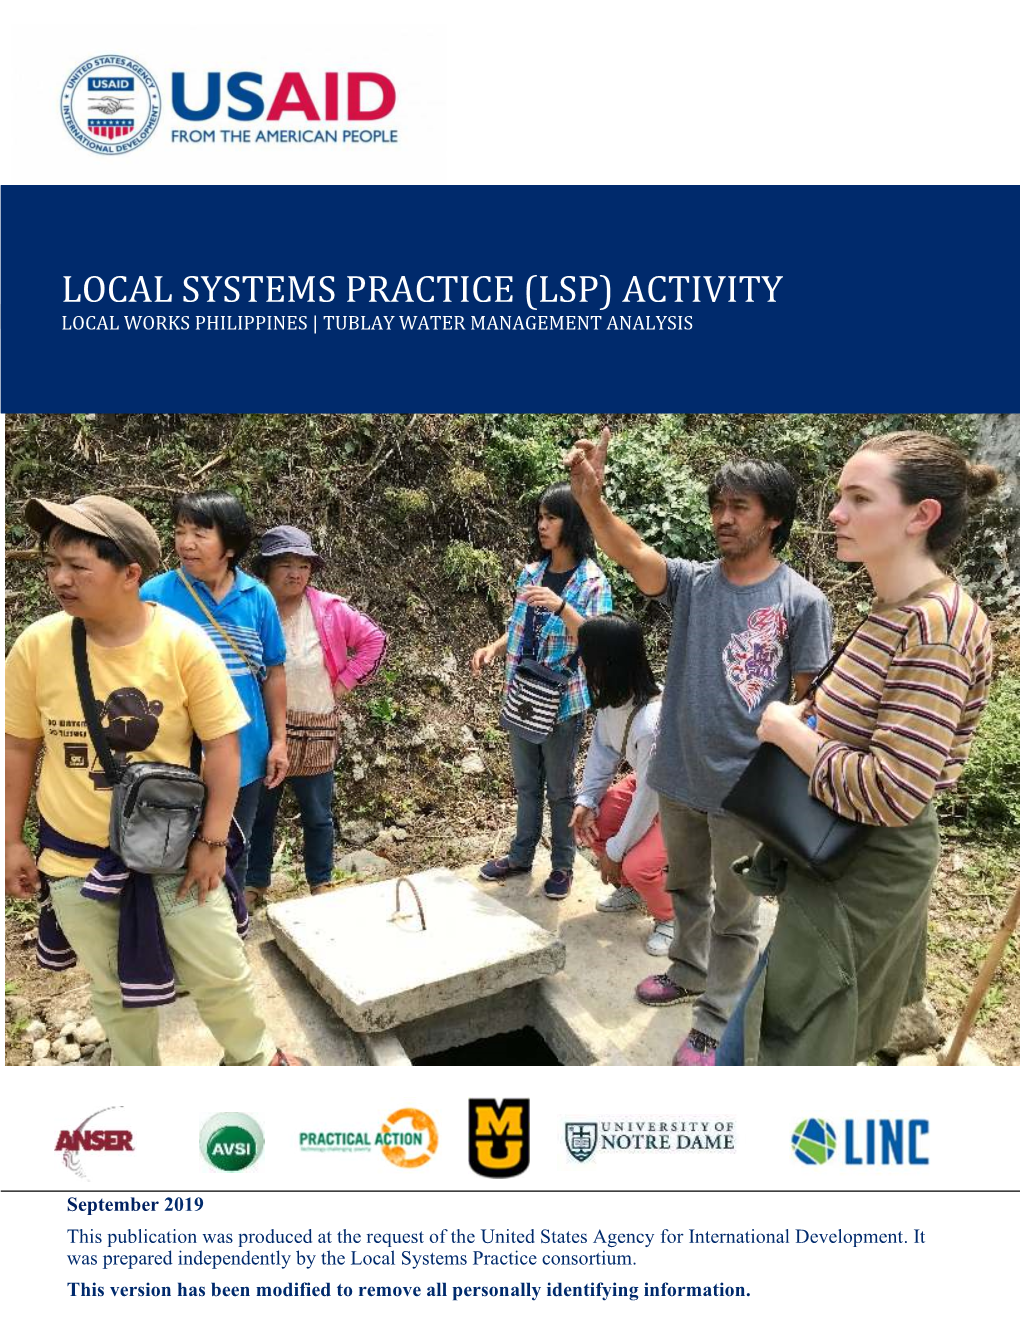 Lsp) Activity Local Works Philippines | Tublay Water Management Analysis